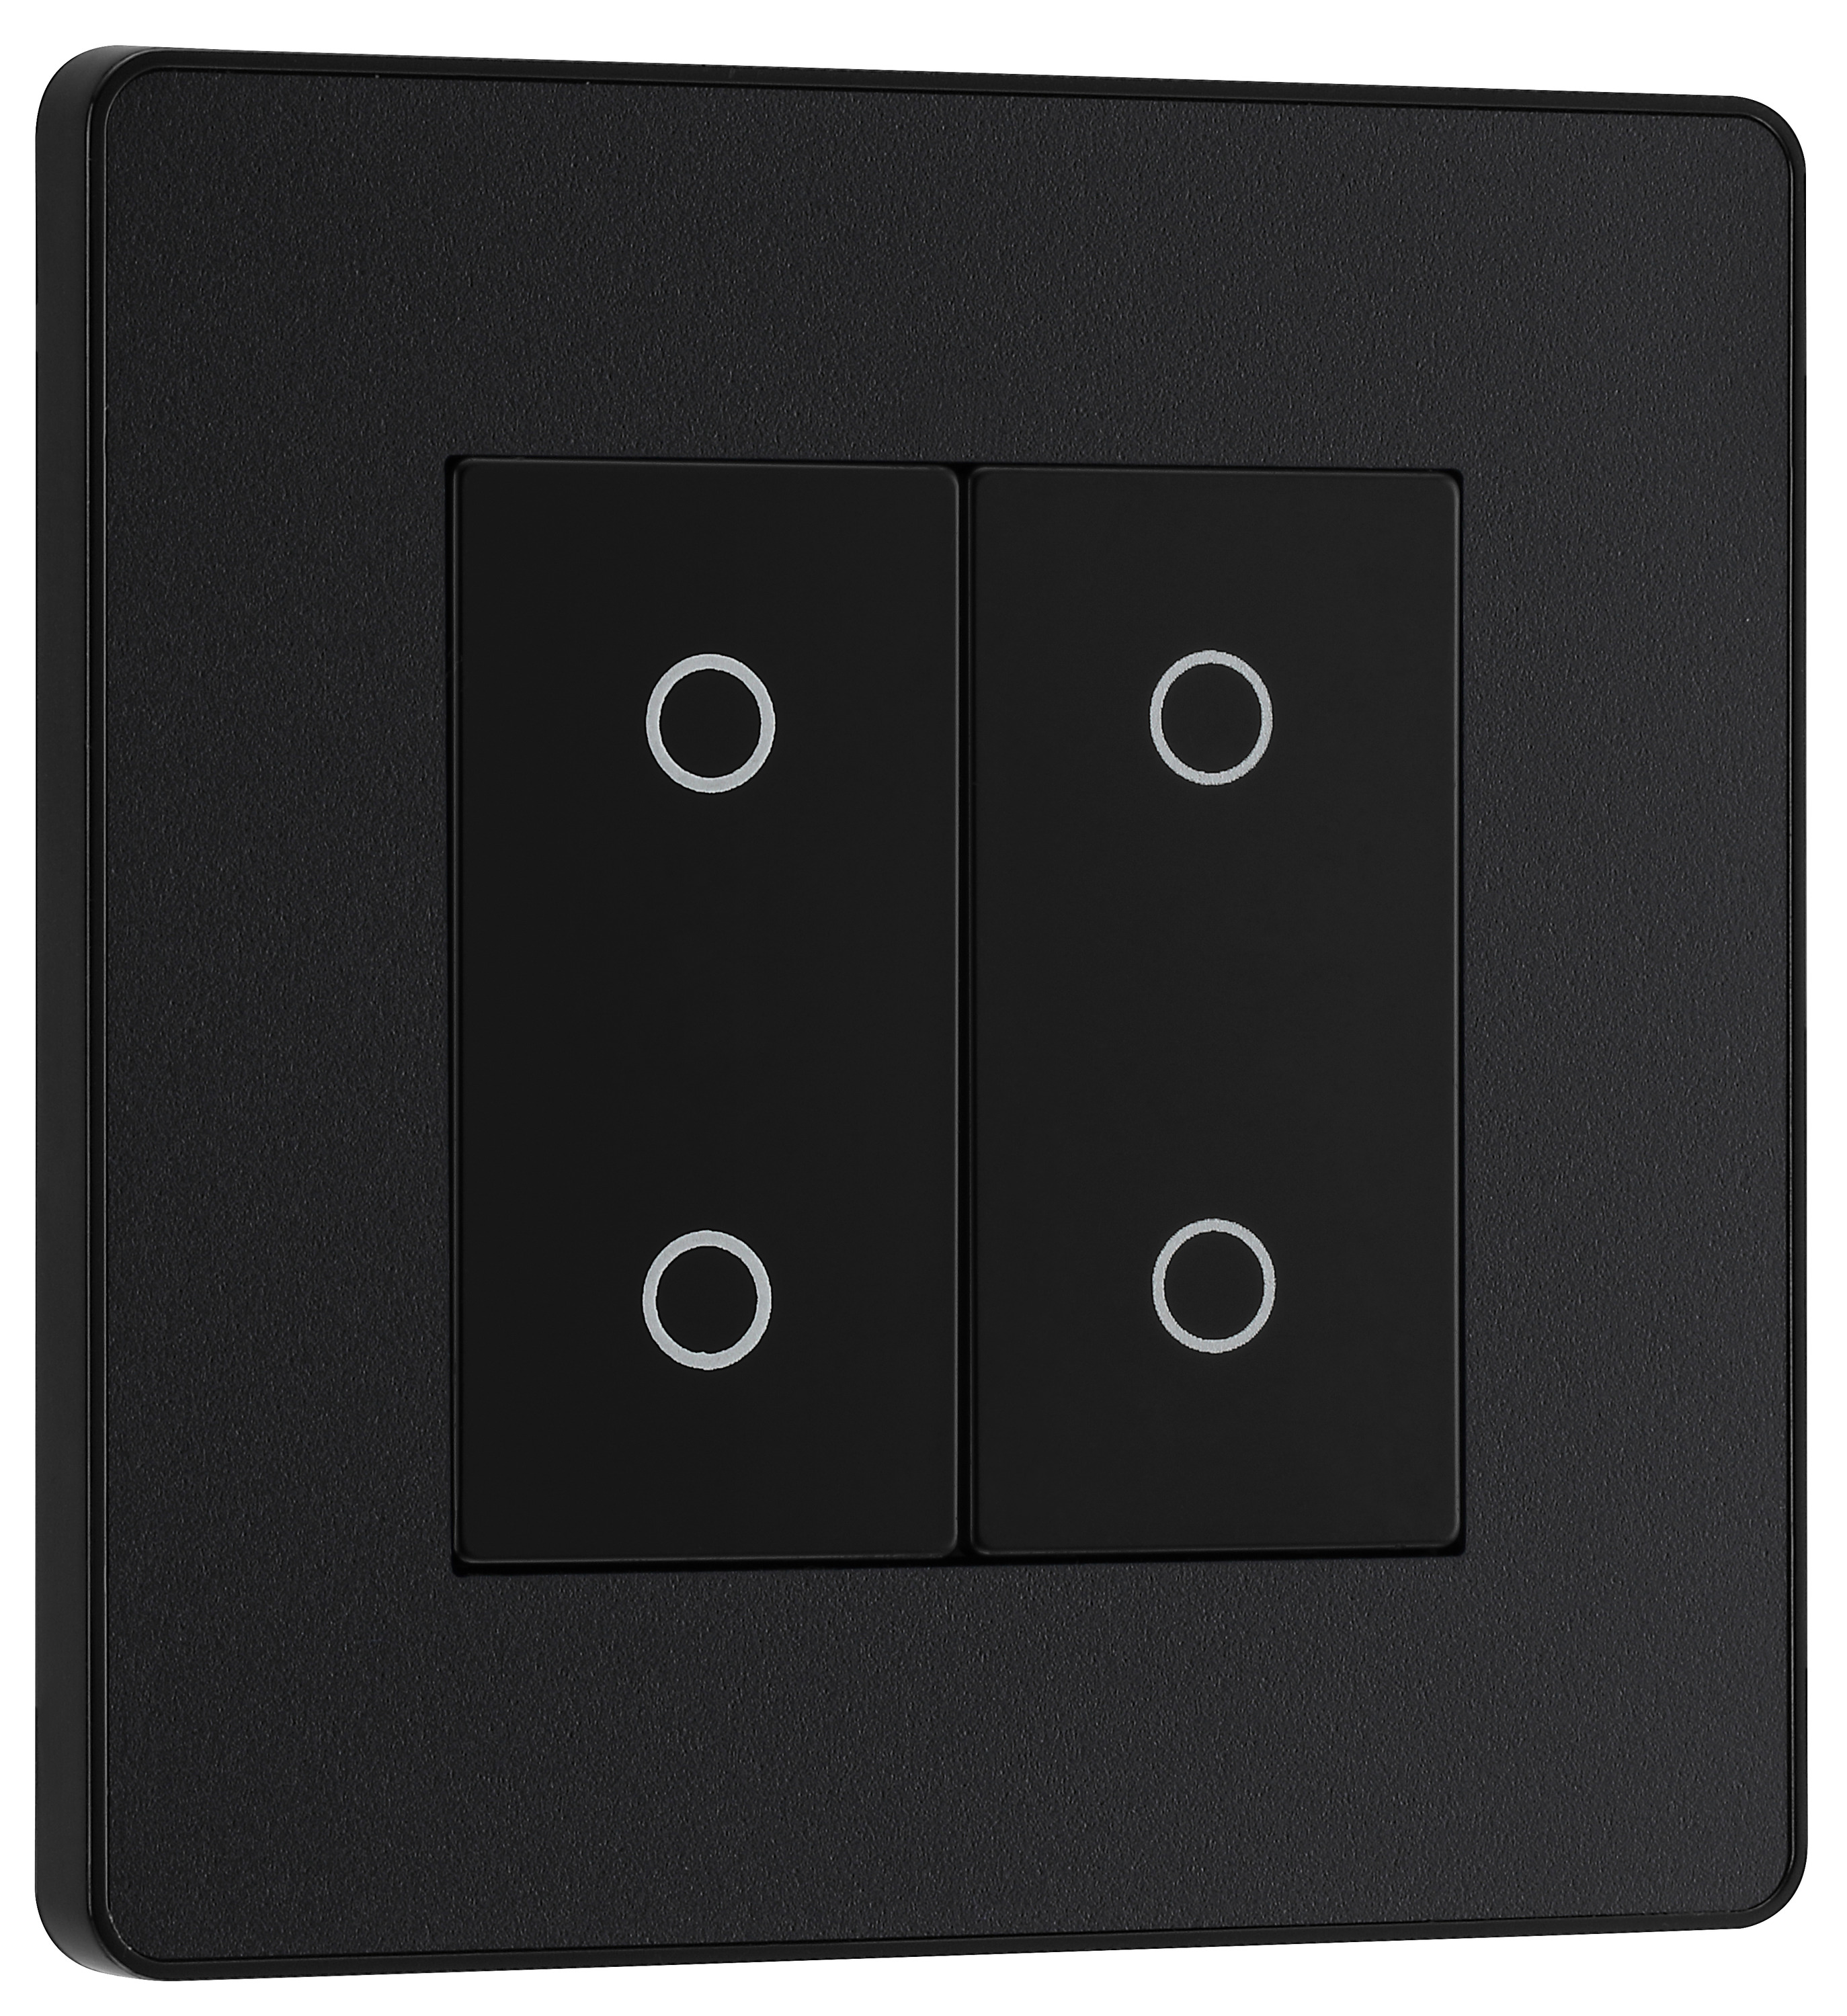 Image of BG Evolve Matt Black (Black Ins) 200W Double Touch Dimmer Switch, 2-Way Master